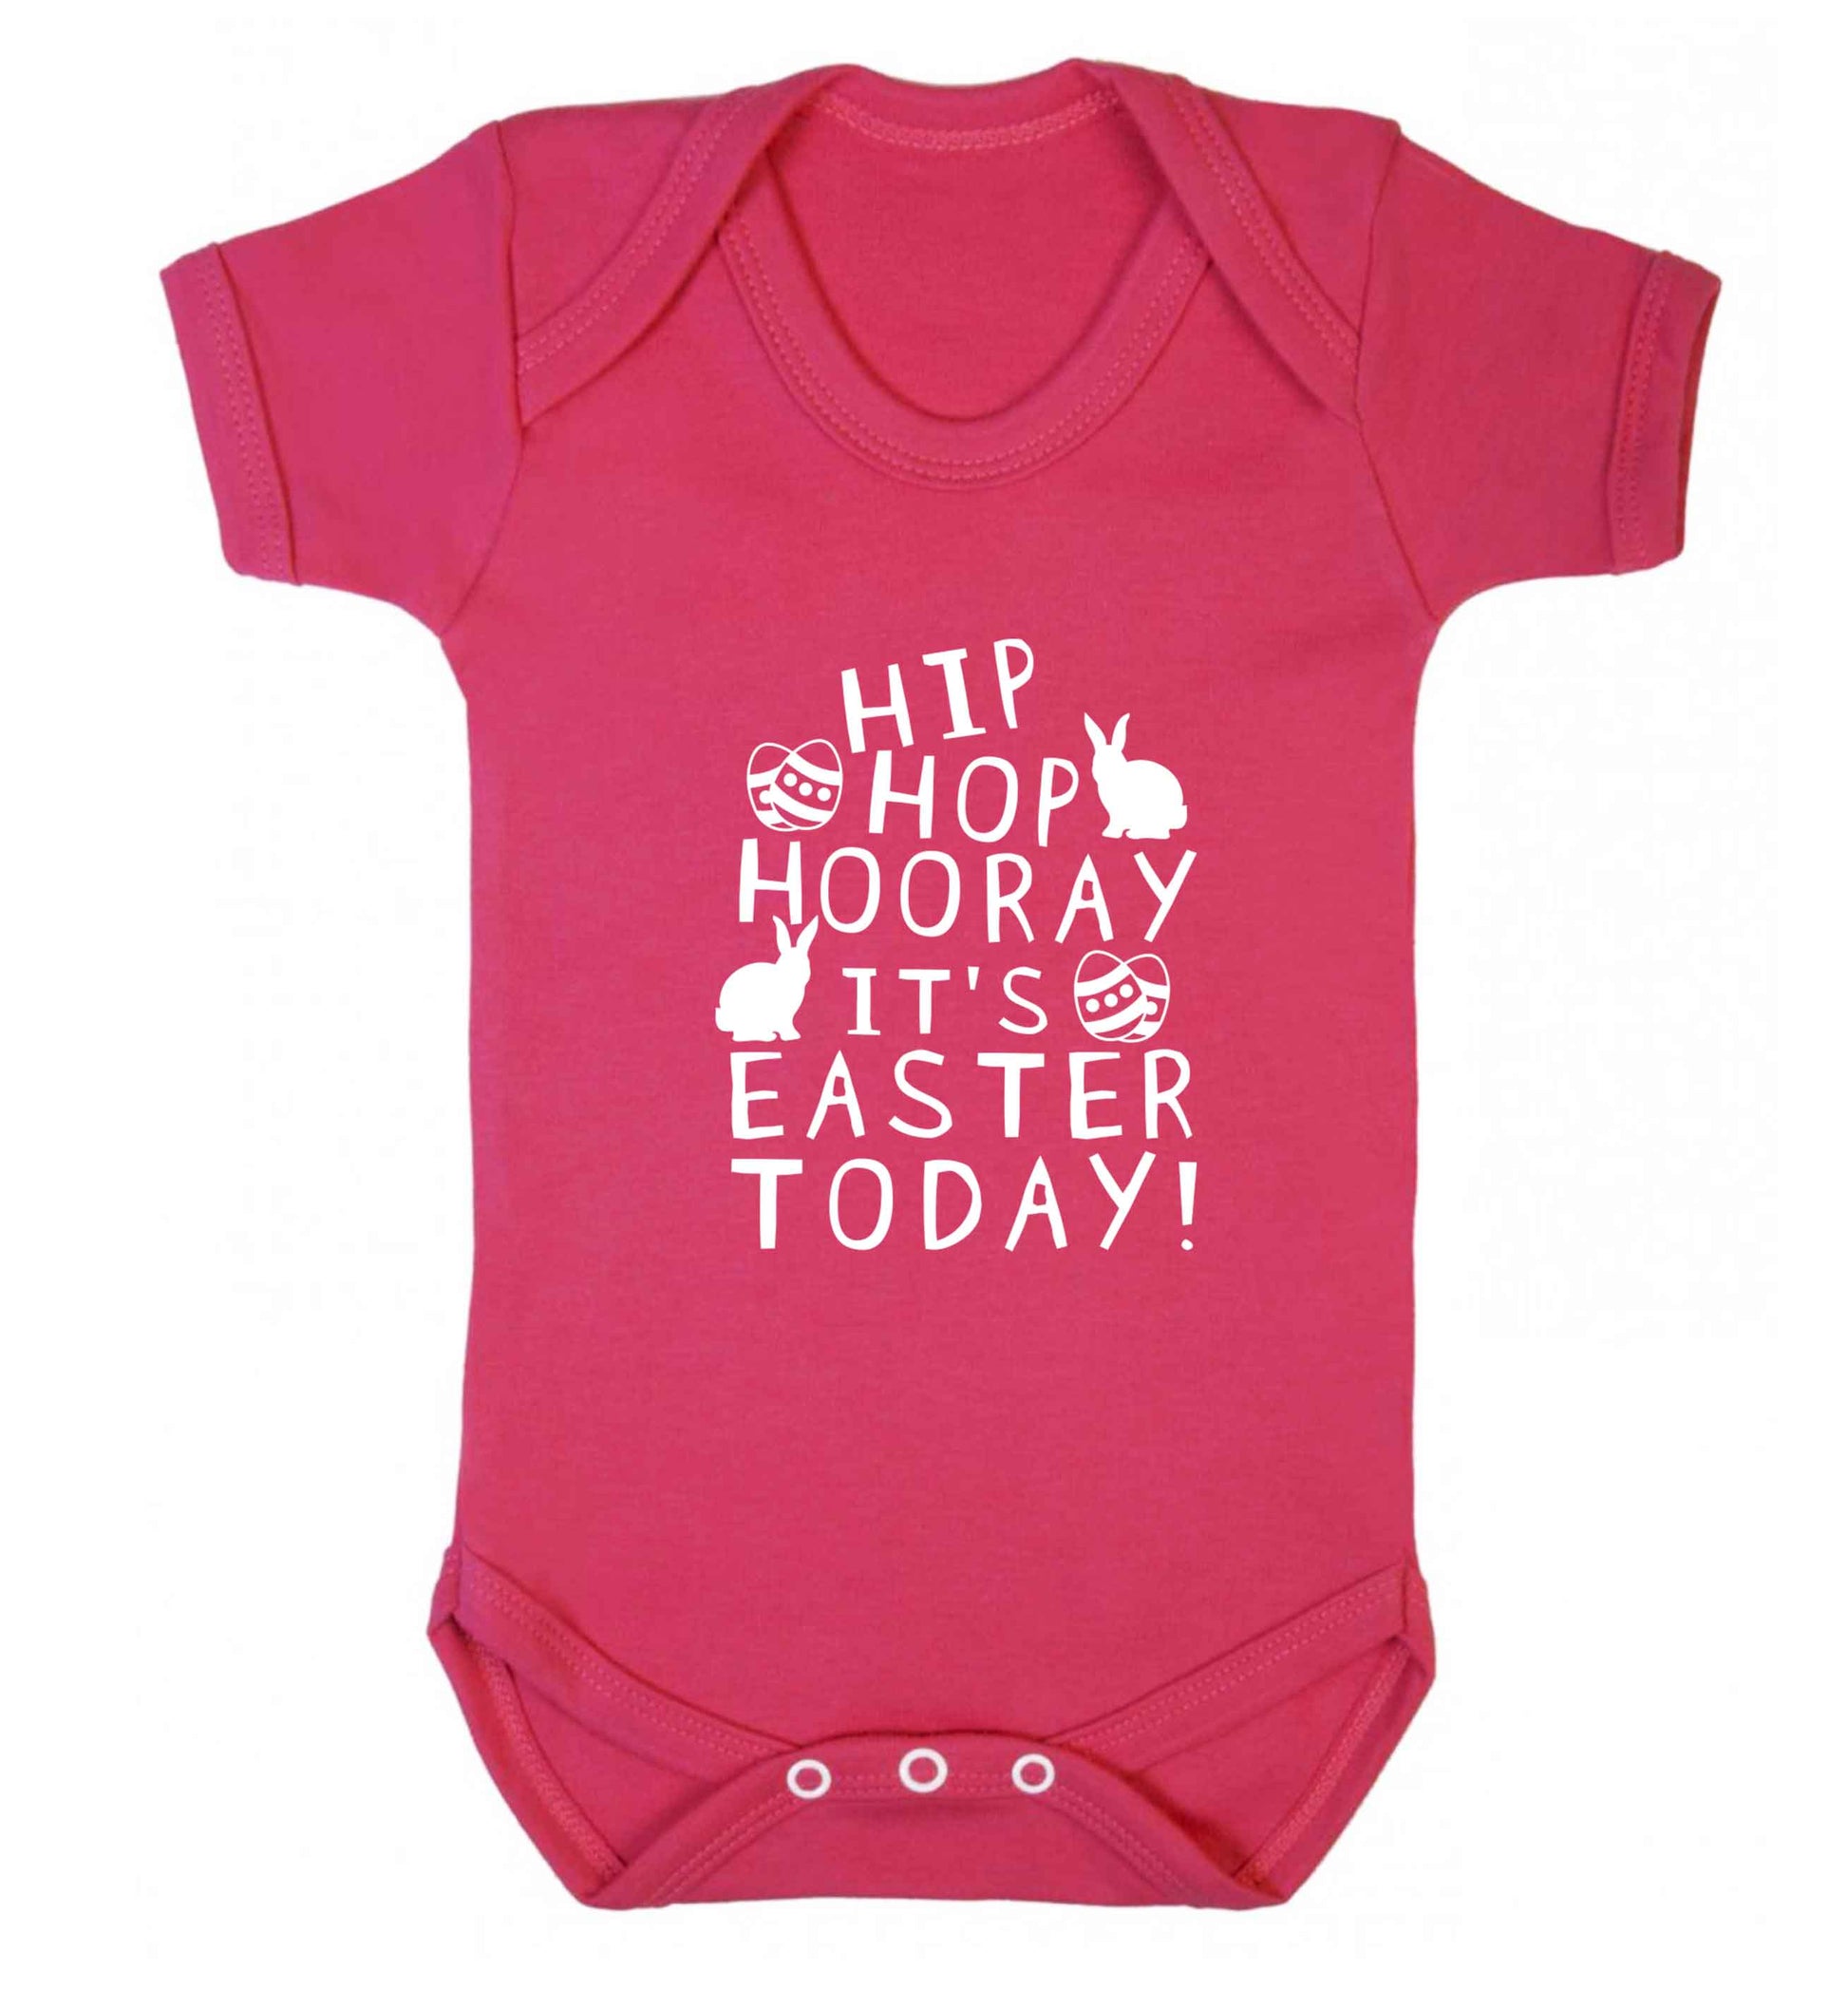 Hip hip hooray it's Easter today! baby vest dark pink 18-24 months